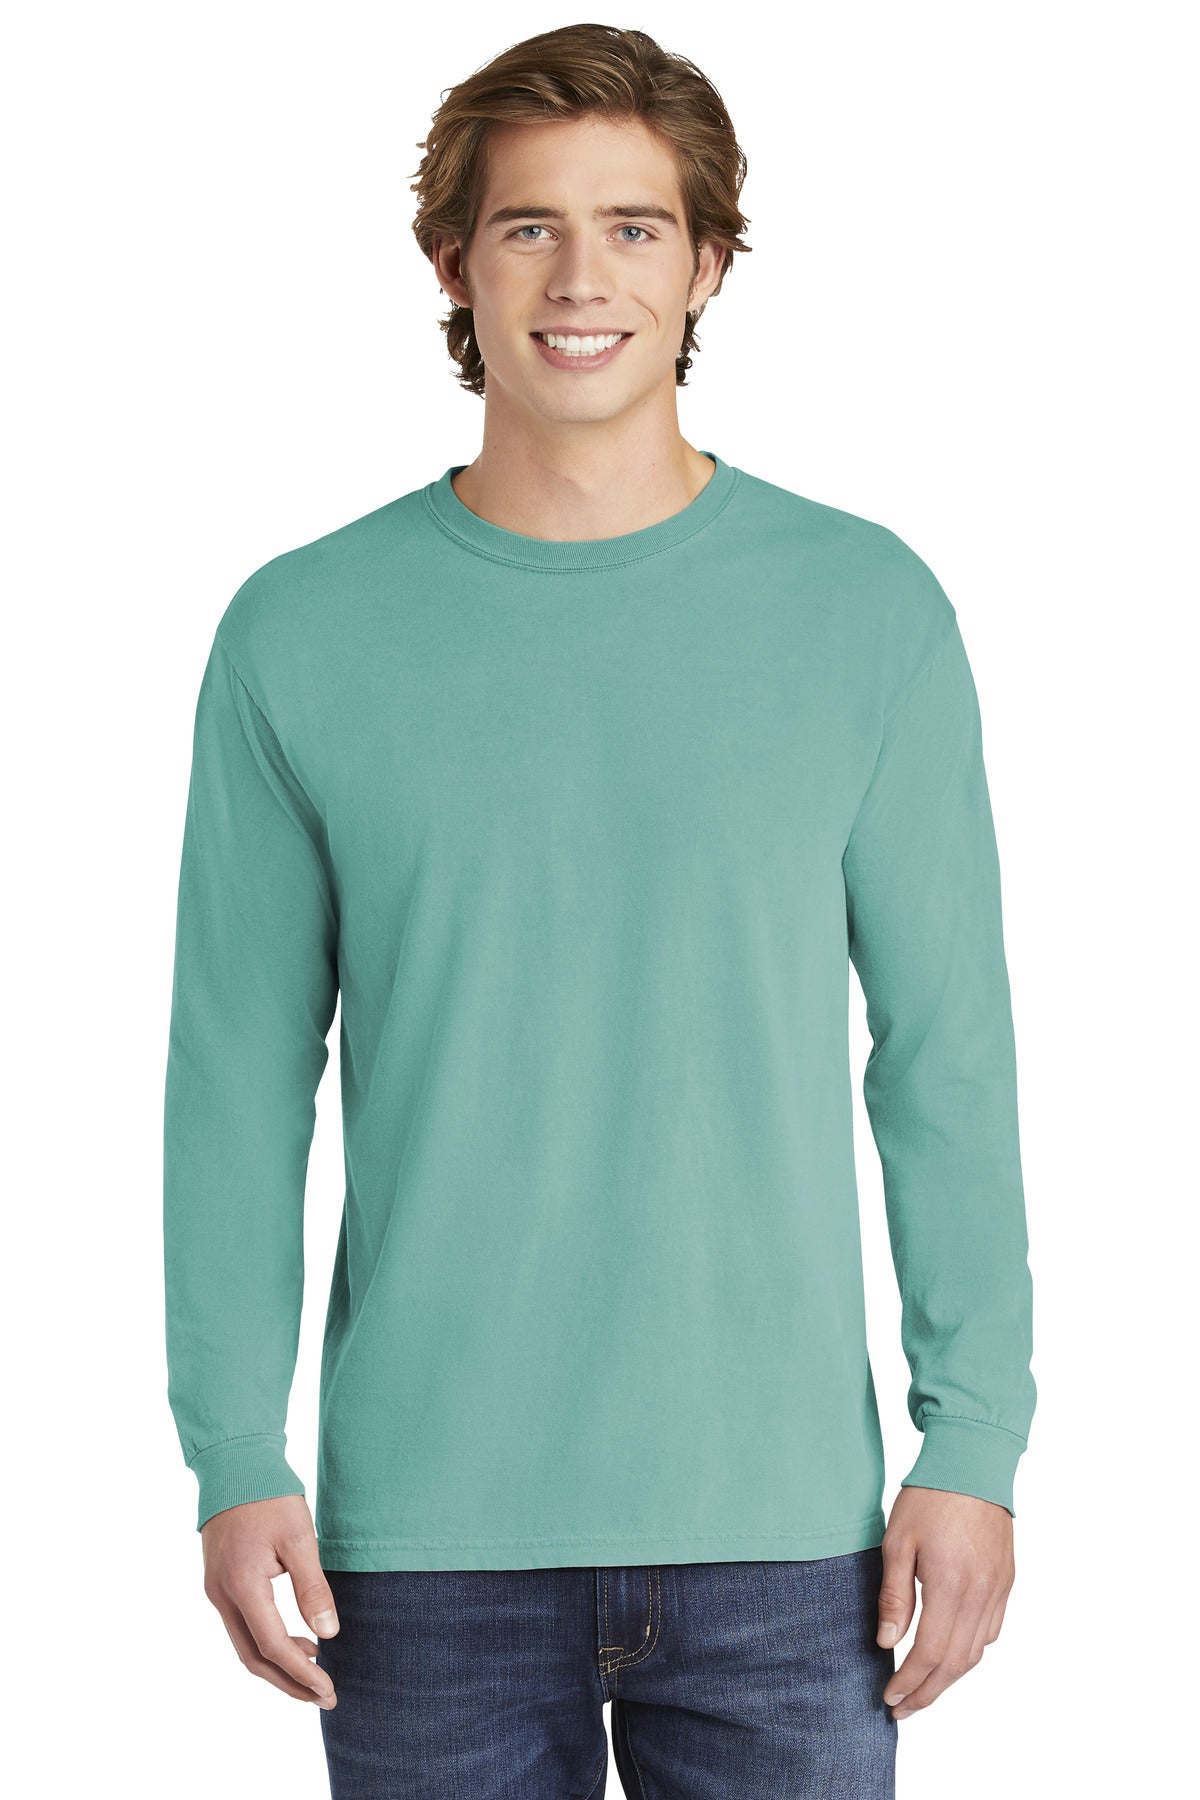 T-Shirts Seafoam Comfort Colors